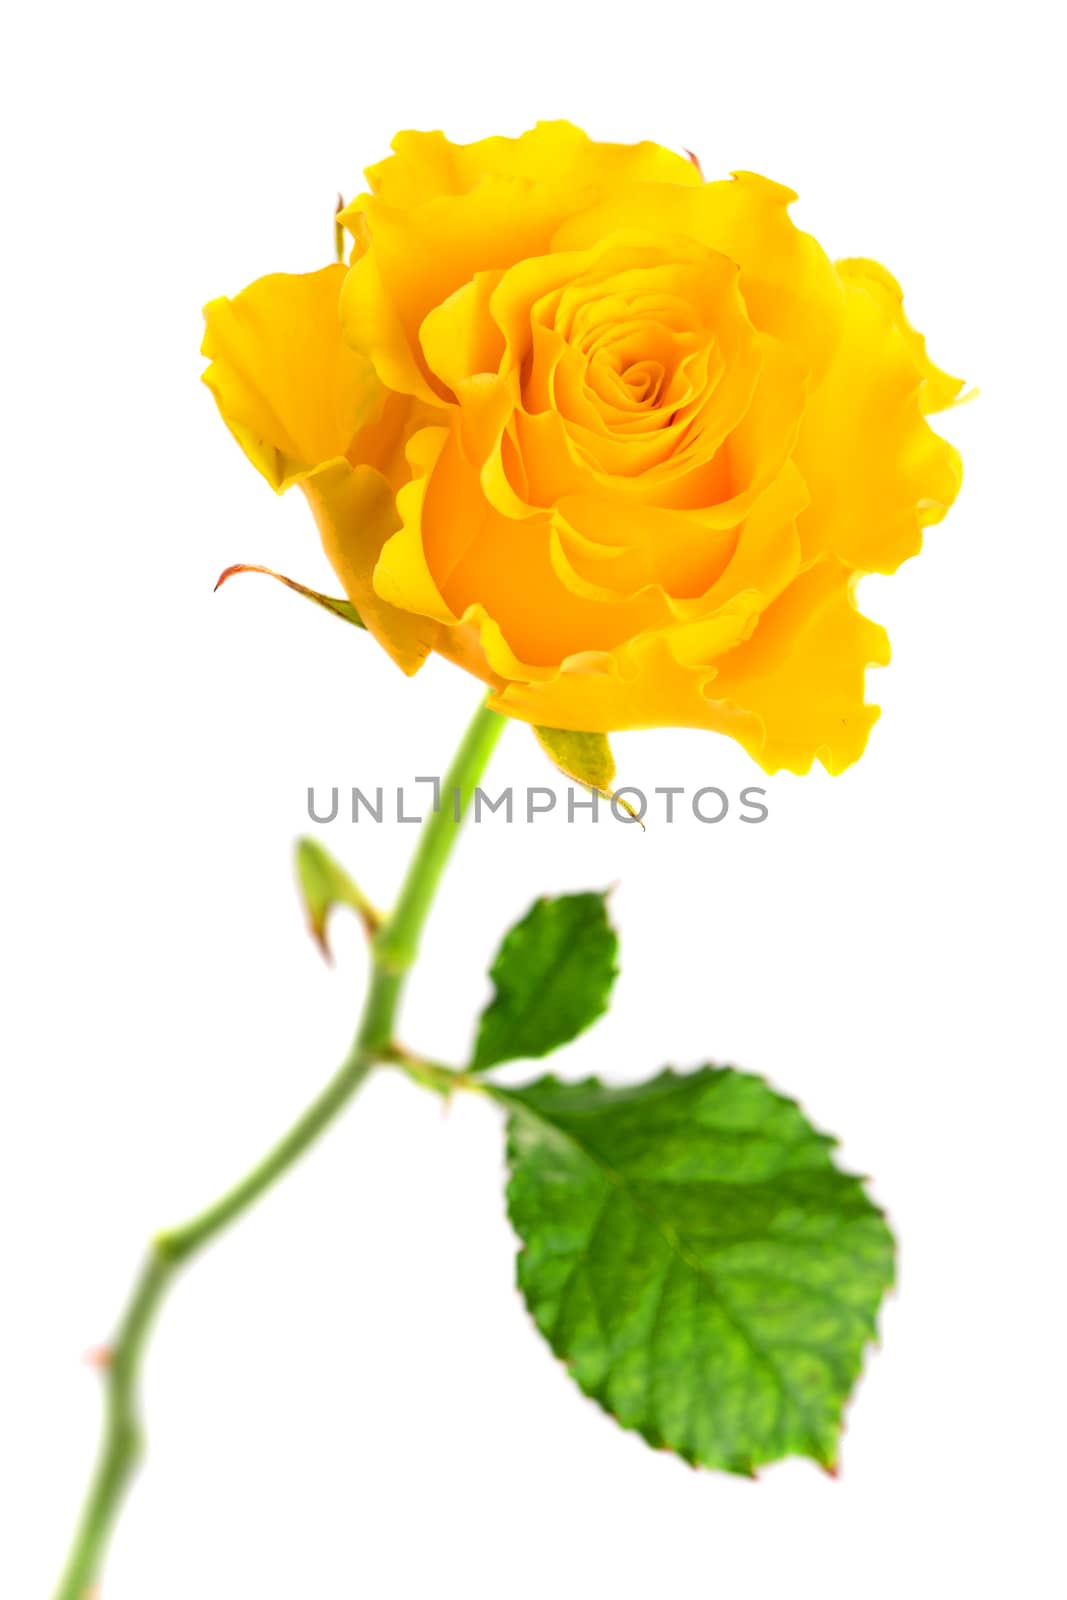 Yellow rose isolated on white background